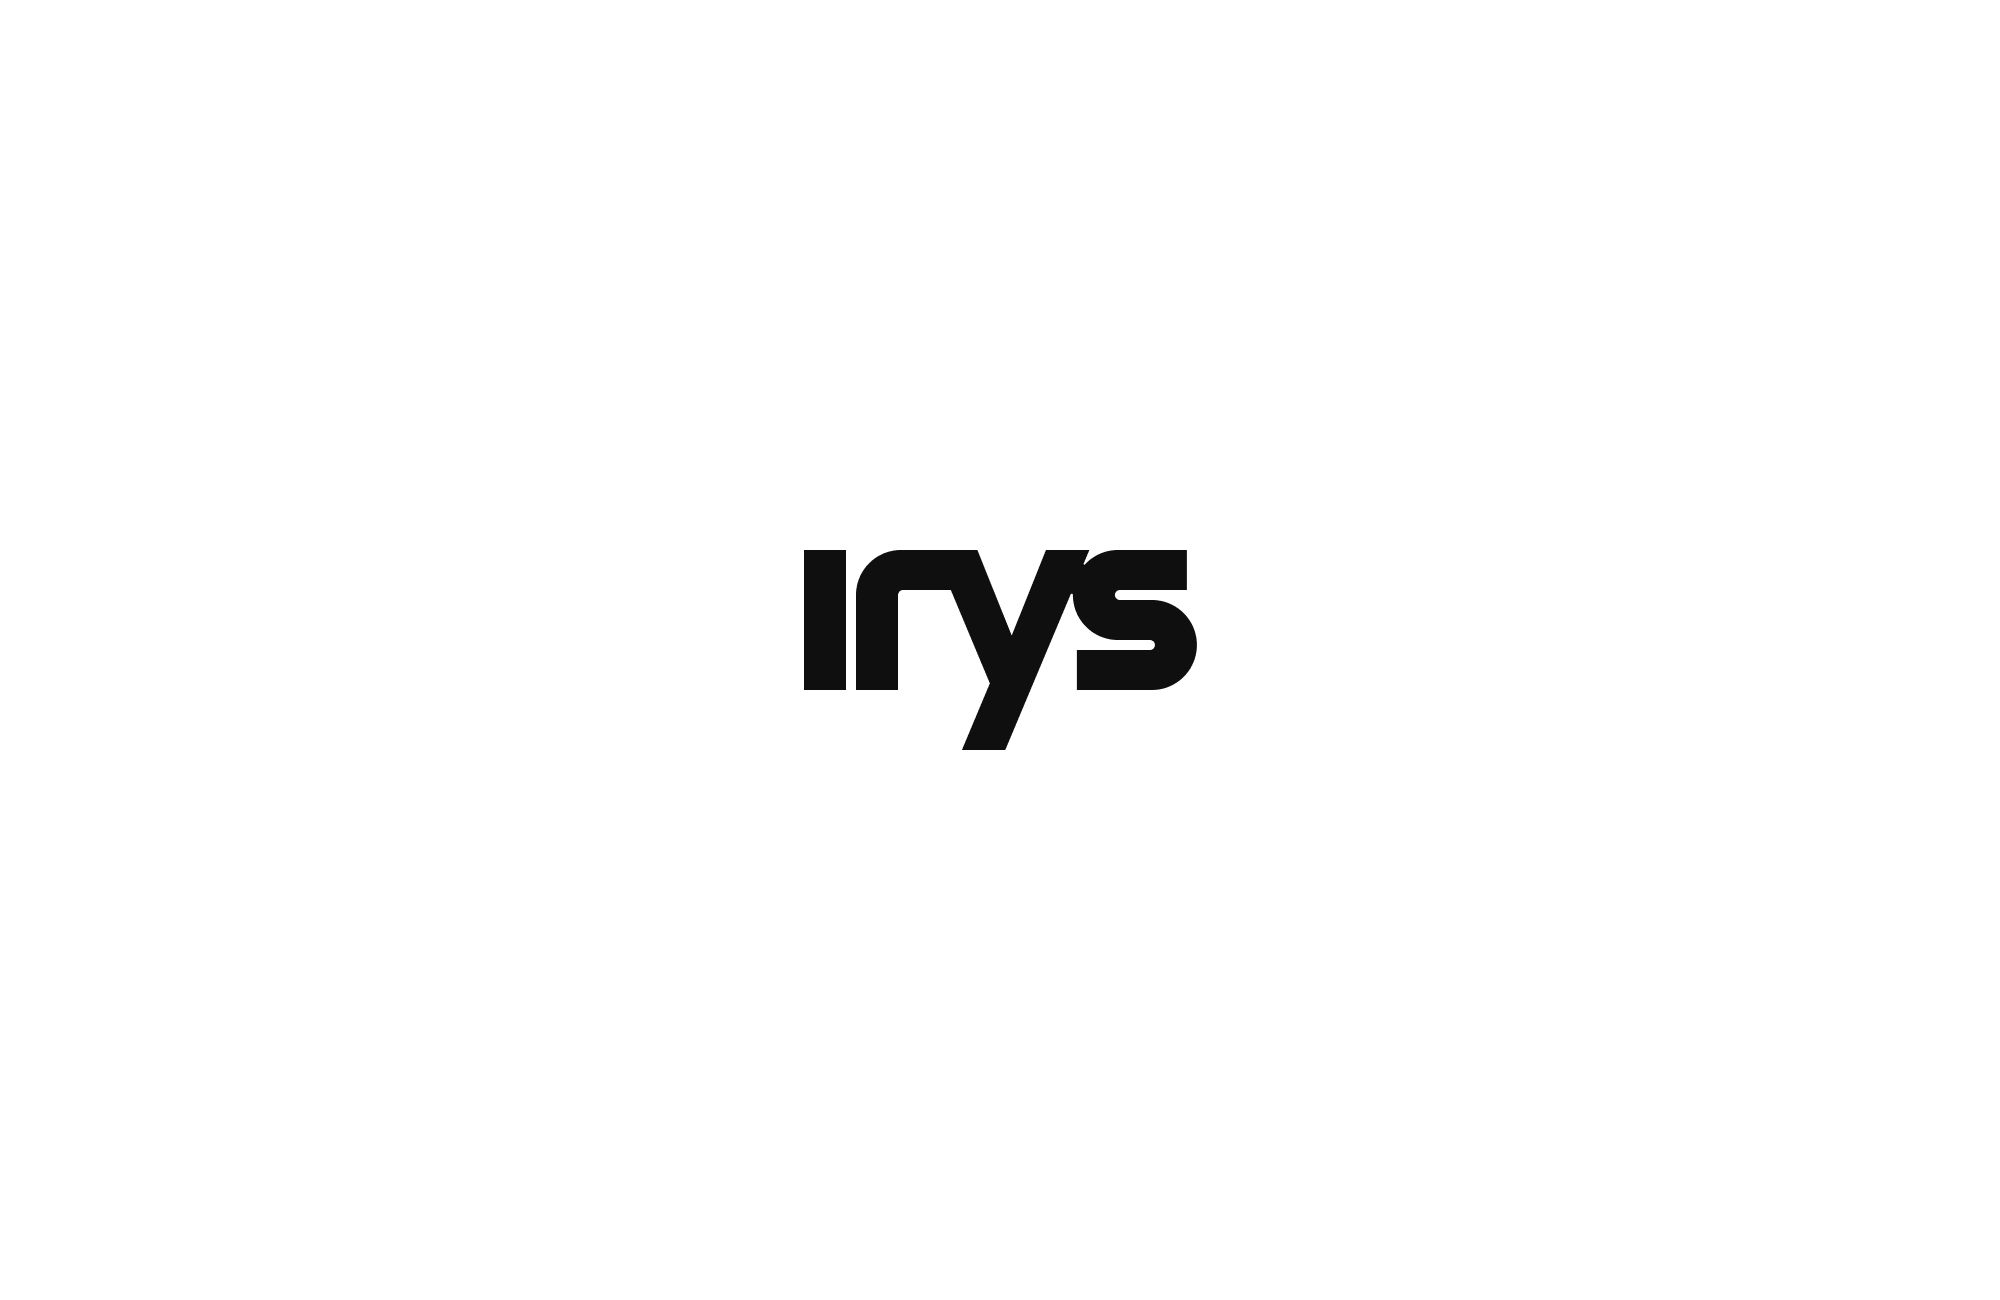 Irys logo white